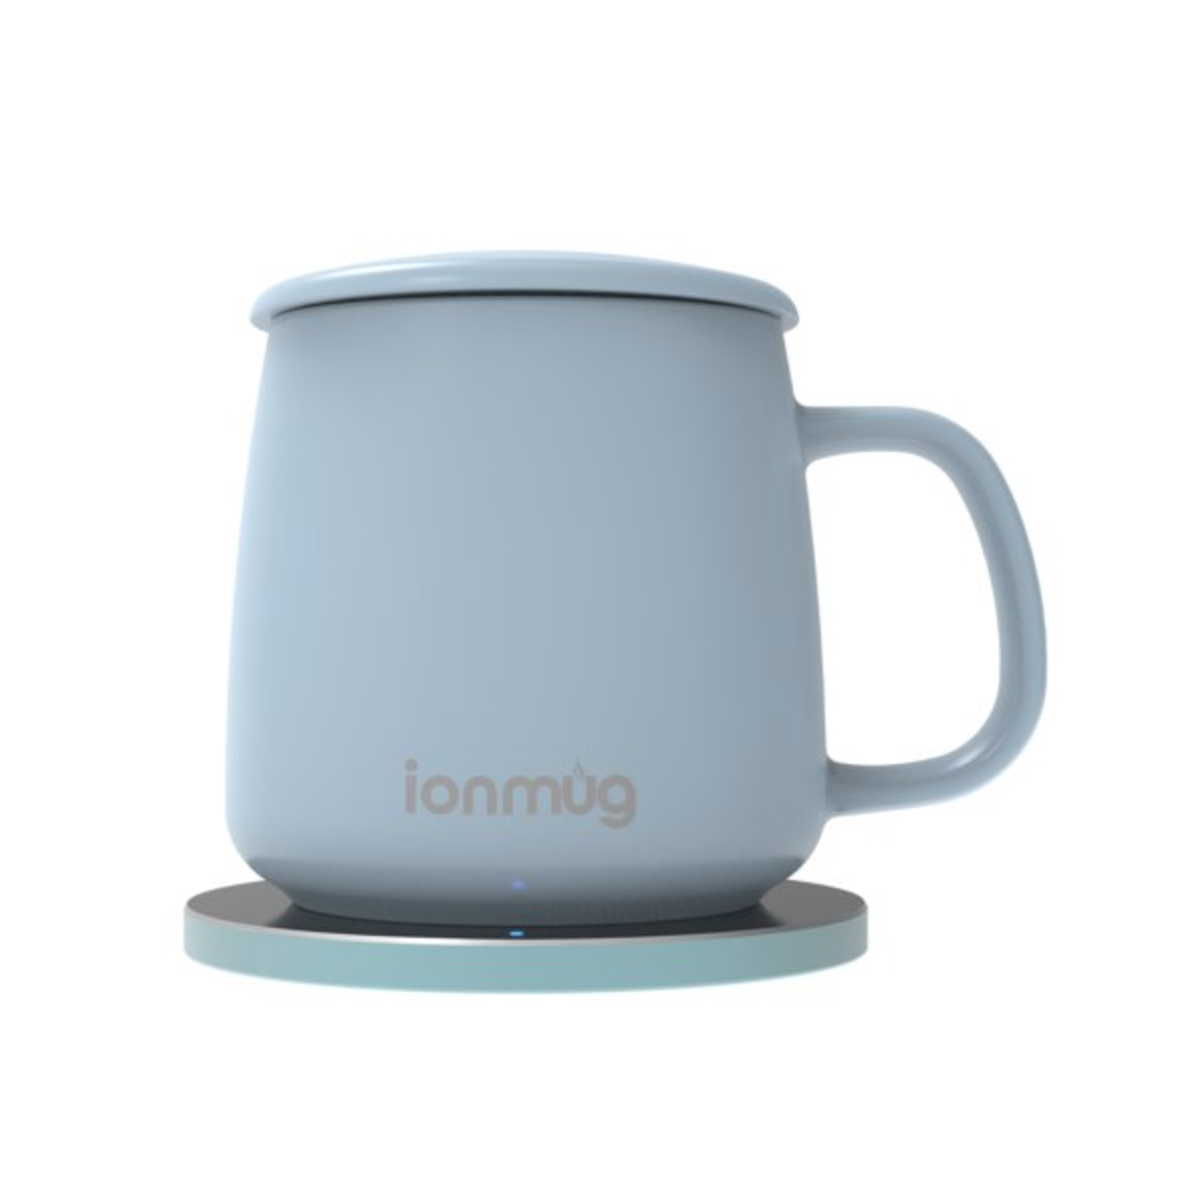 Evjurcn Electric Coffee Mug Warmer USB Rechargeable Coffee Cup Heater  Portable Heating Waterproof Tea Coffee Milk Warmer Pad for Office and Home  Use